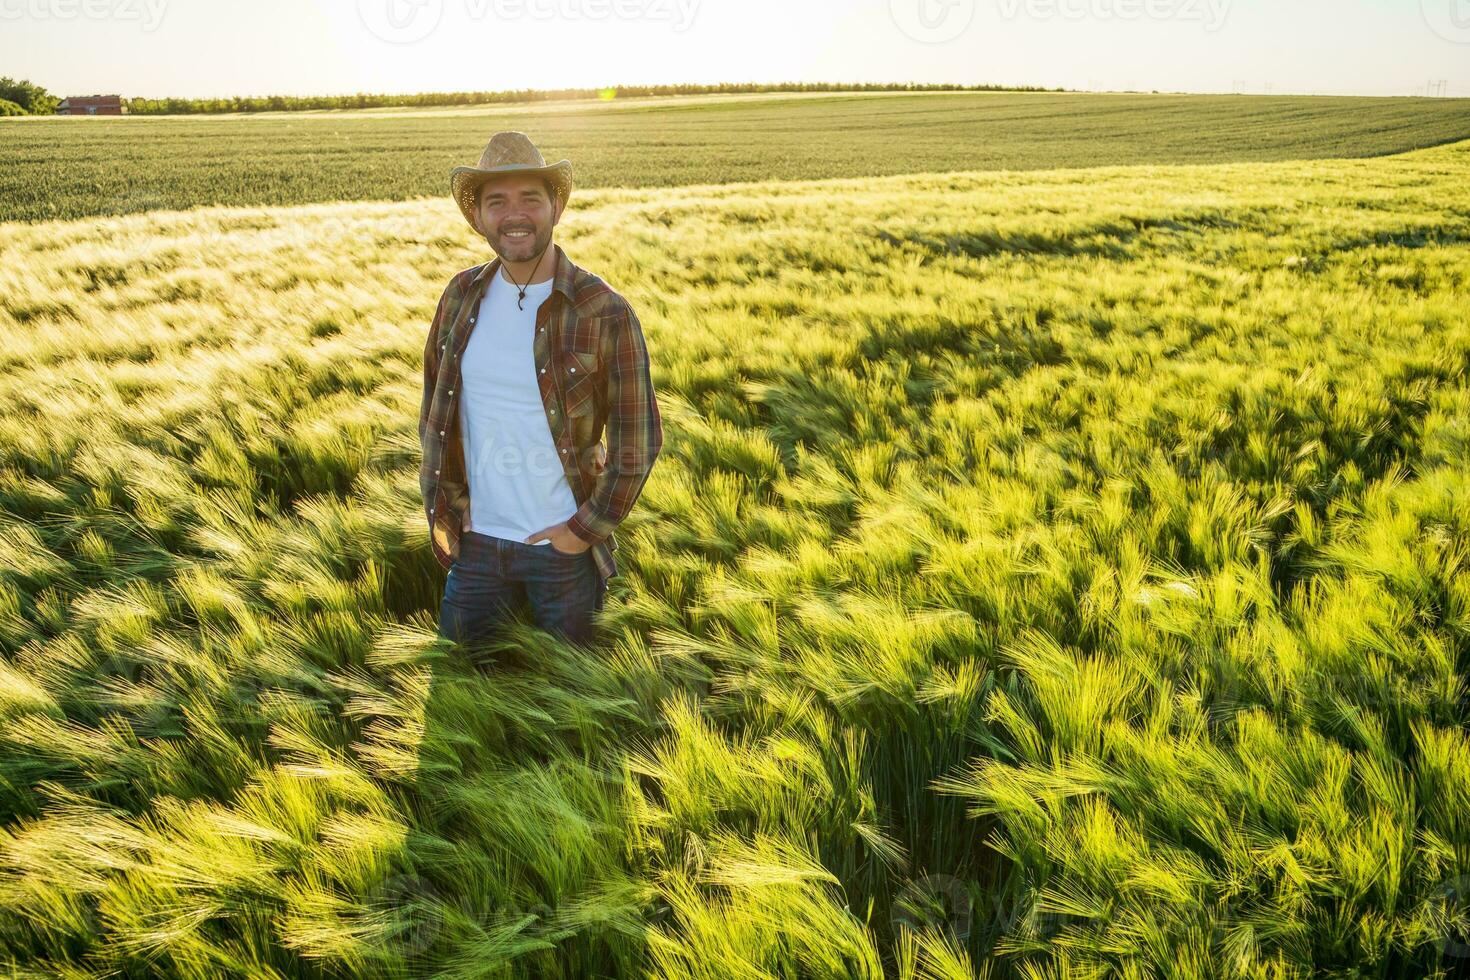 Farmer man outdoors by the barley crop photo